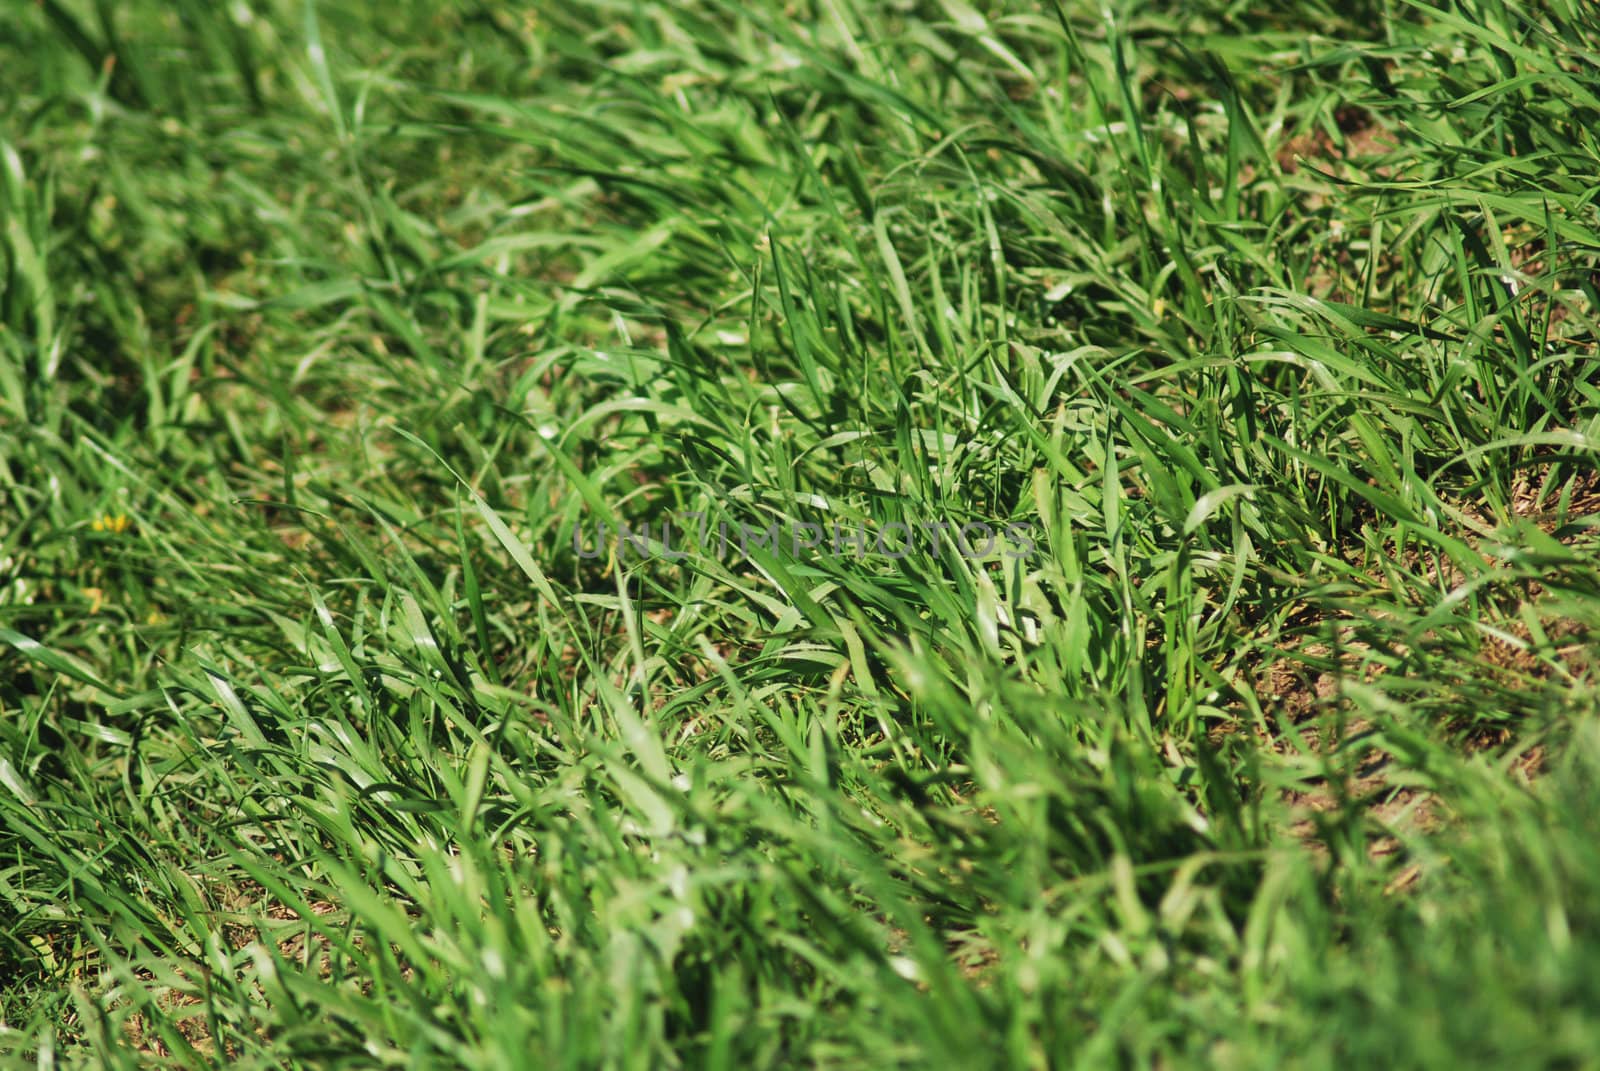 Green spring grass texture - nature background close up           